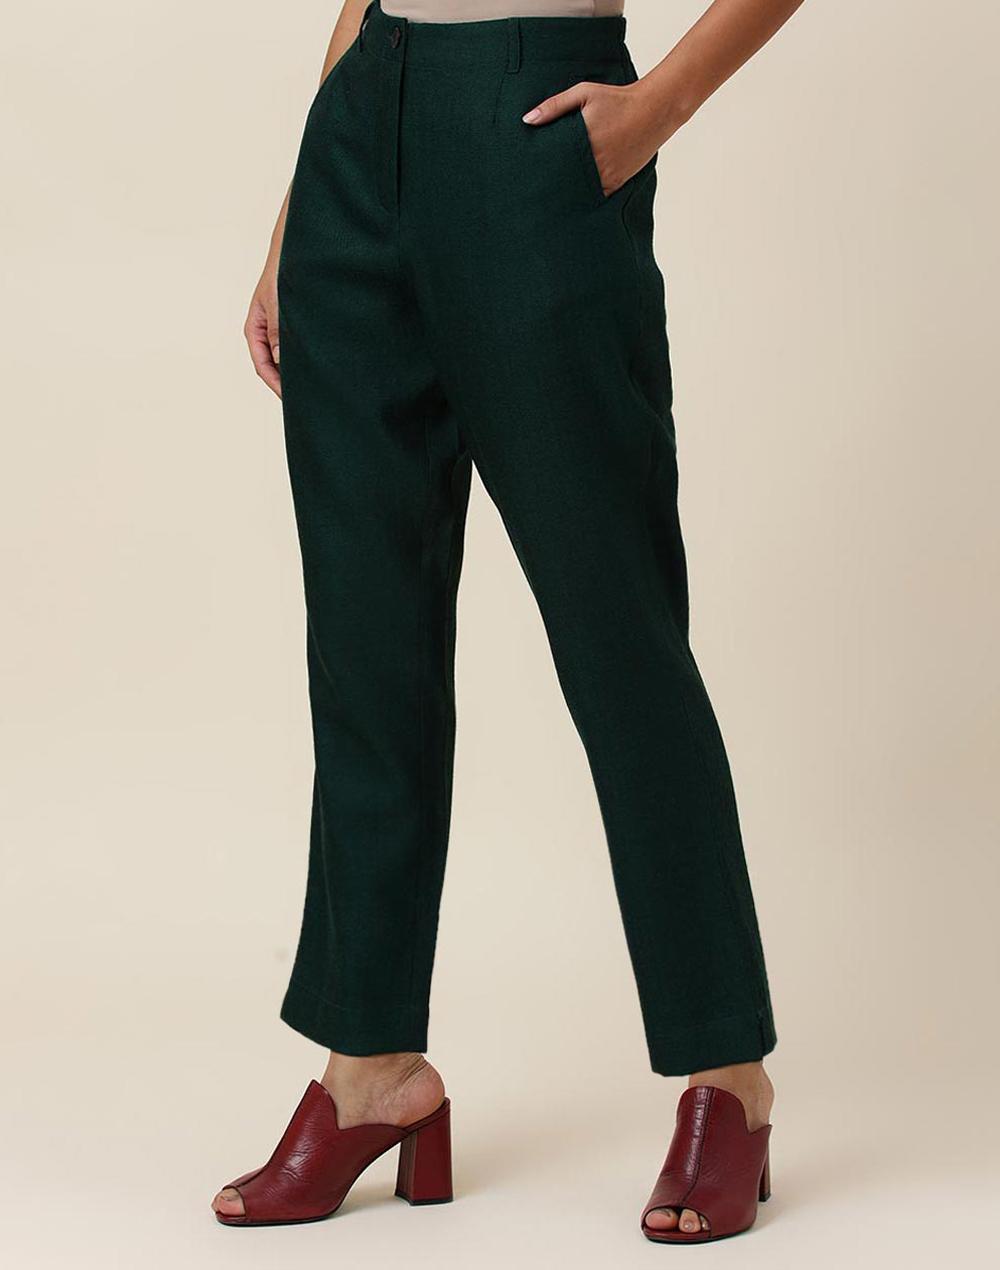 green wool full length formal pant